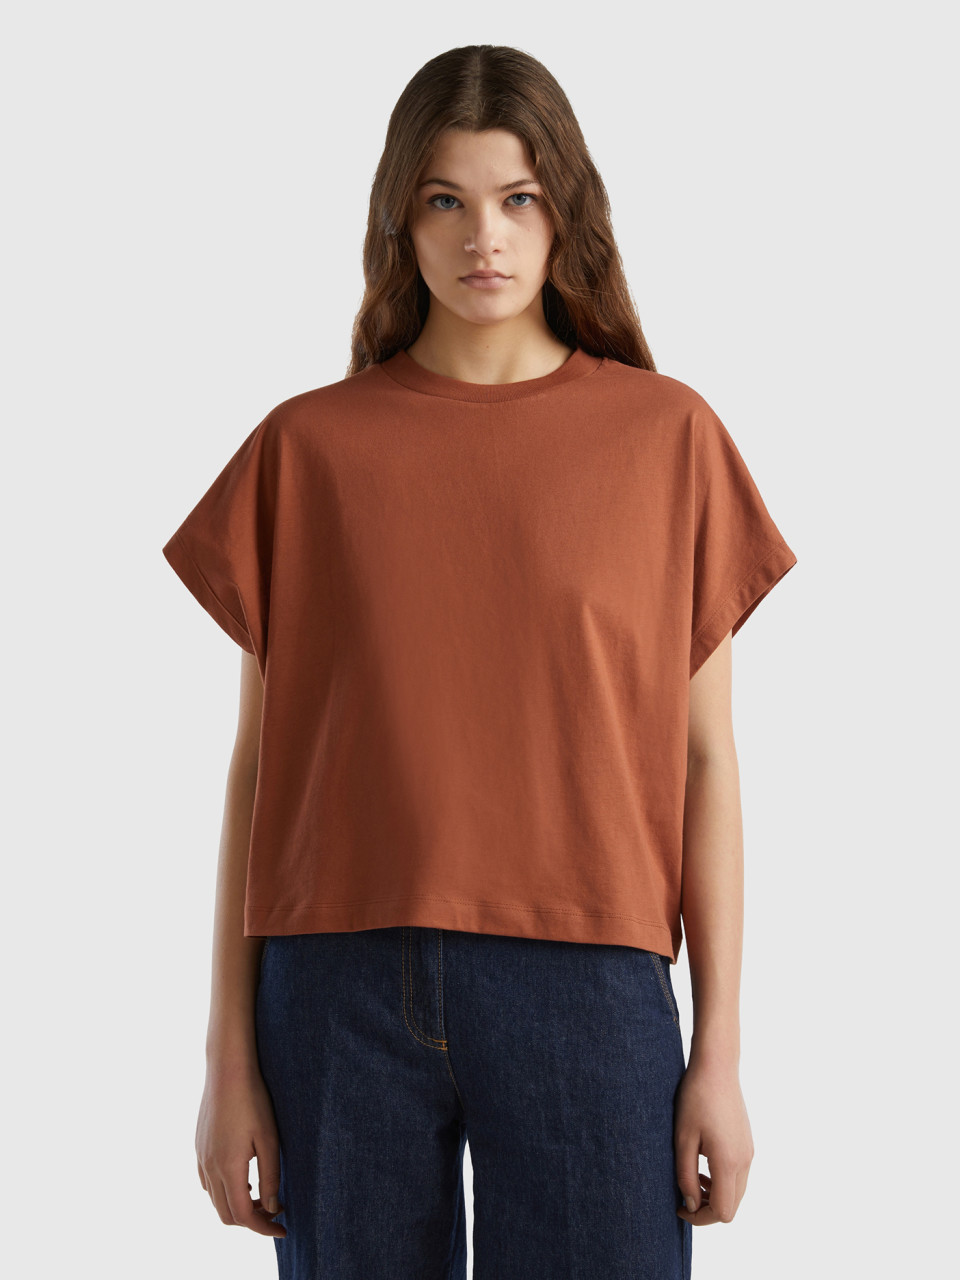 Benetton, Kimono Sleeve T-shirt, Brown, Women